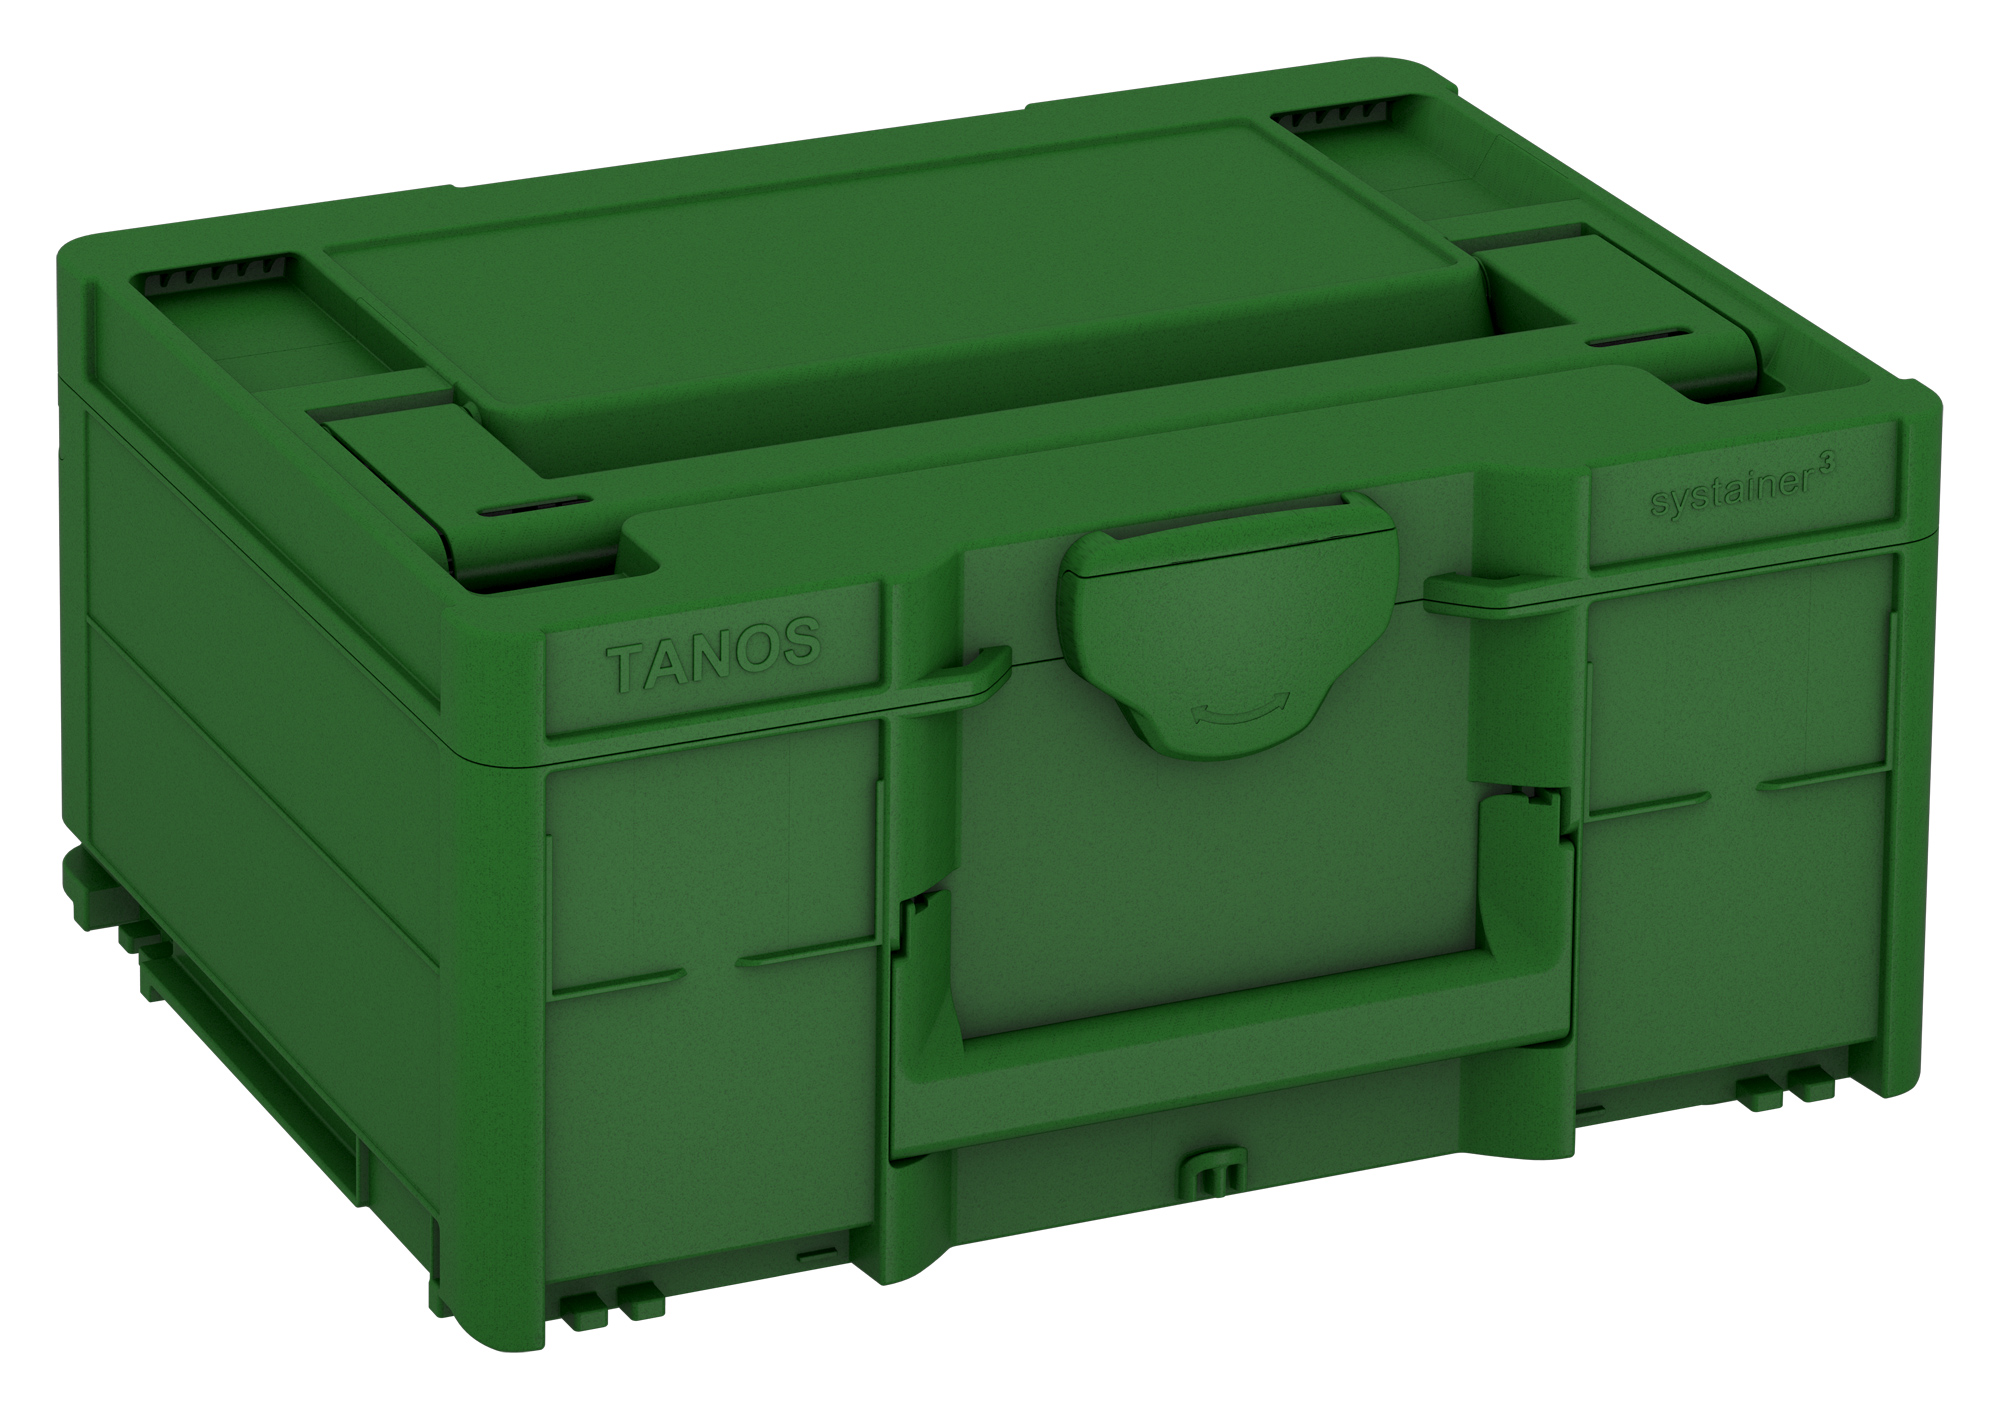 Systainer³ M 187 - Korpus Farbe: Smaragdgrün (RAL 6001) - Griff Farbe: Smaragdgrün (RAL 6001) - Verschluss Farbe: Smaragdgrün (RAL 6001)